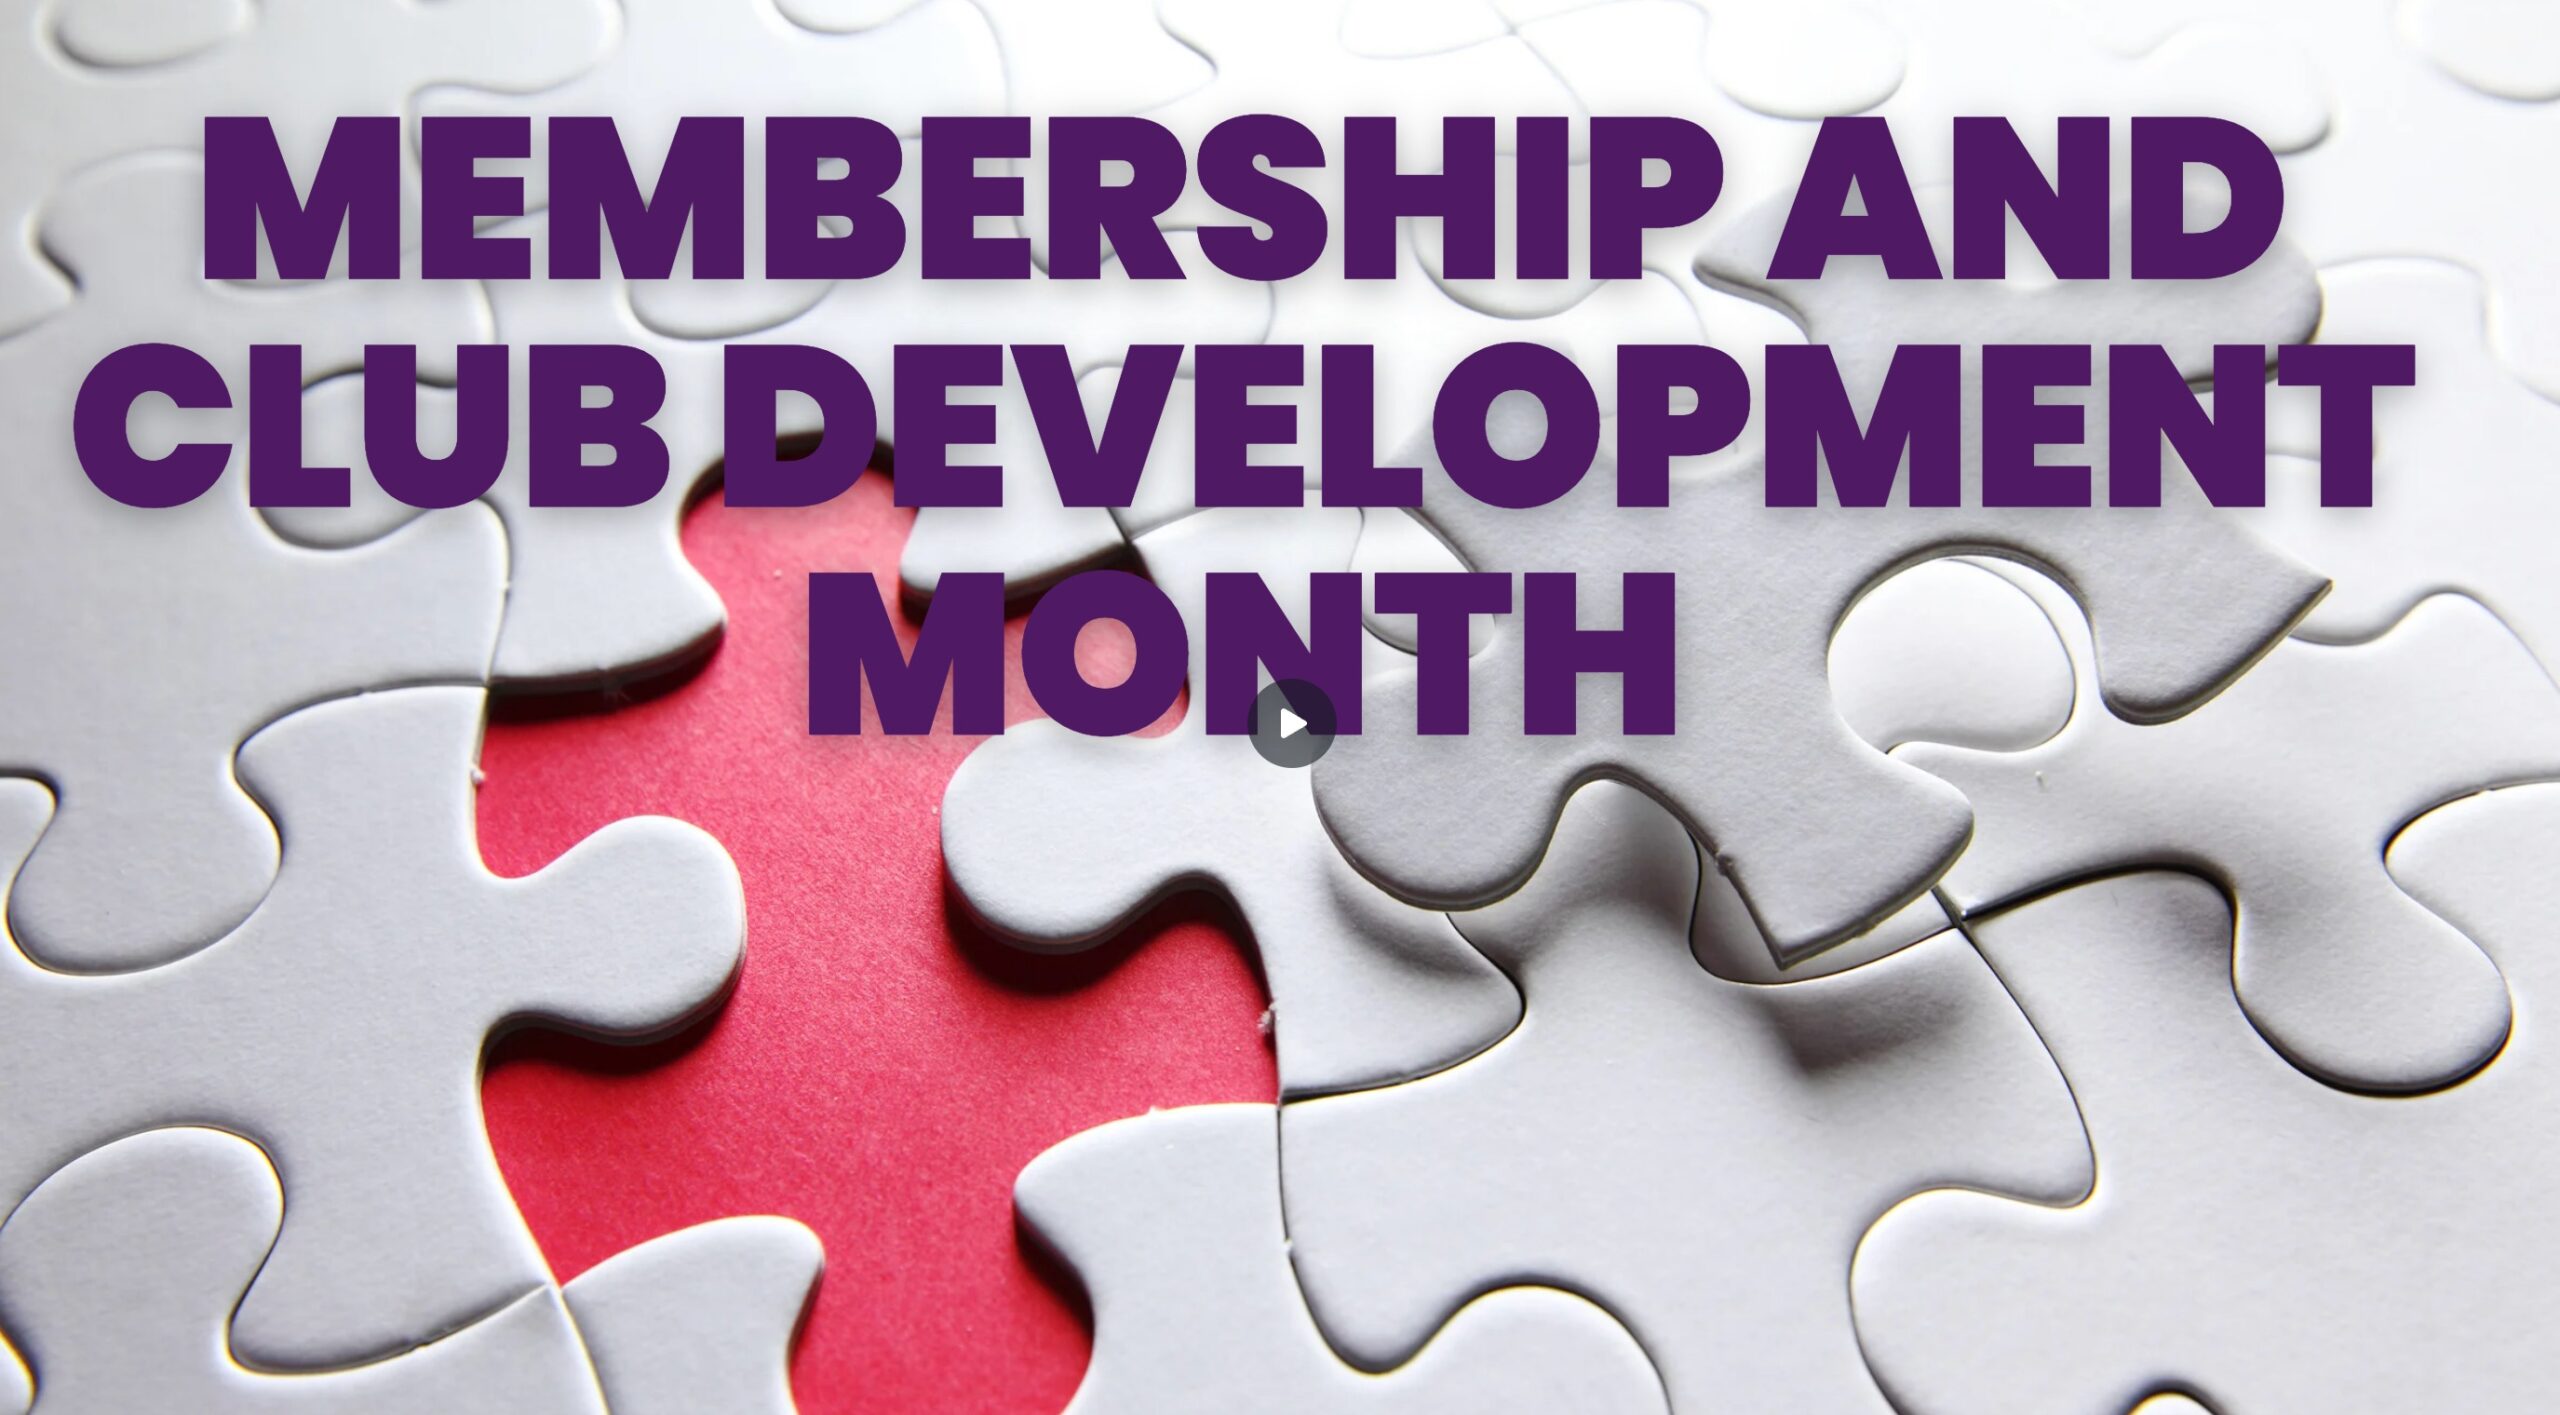 Membership and Club Development Month